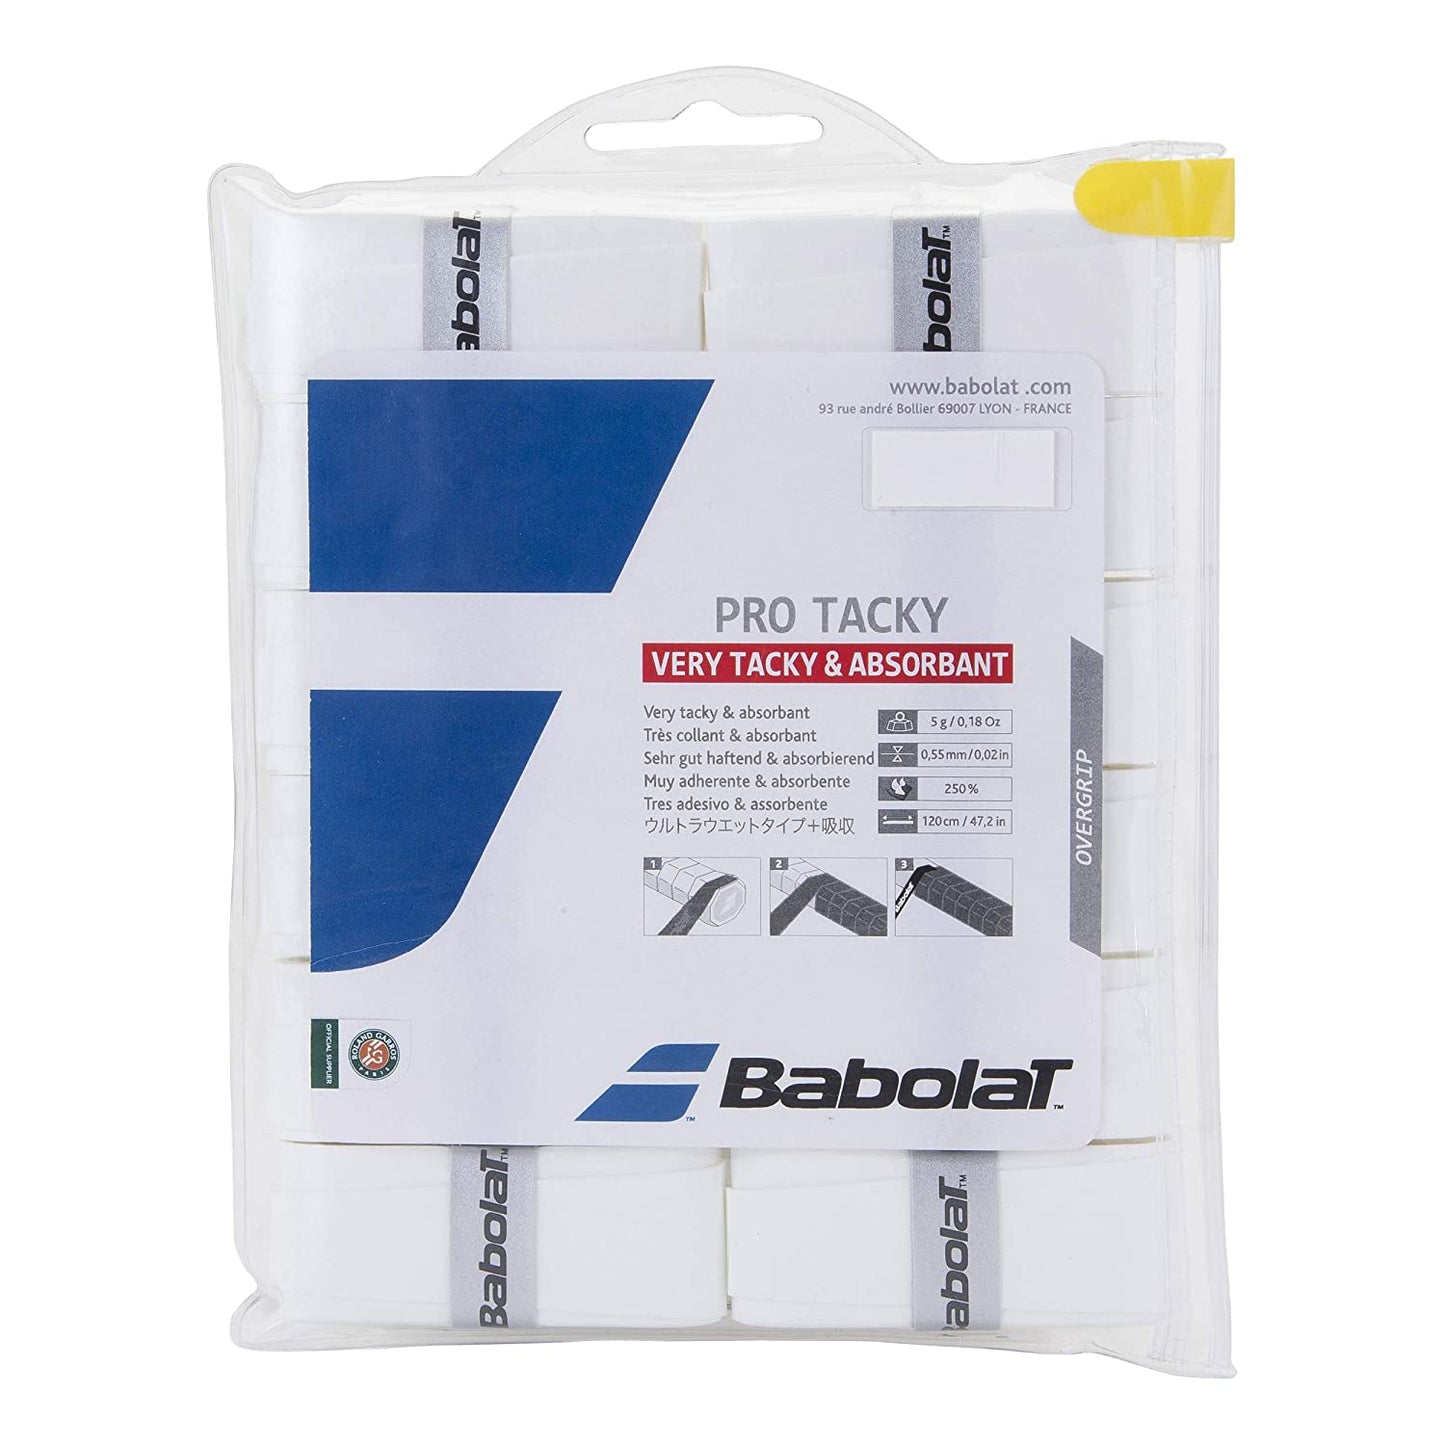 Babolat 654009-101 Pro Tacky X12 Tennis Grip Pack of 12 -White - Best Price online Prokicksports.com